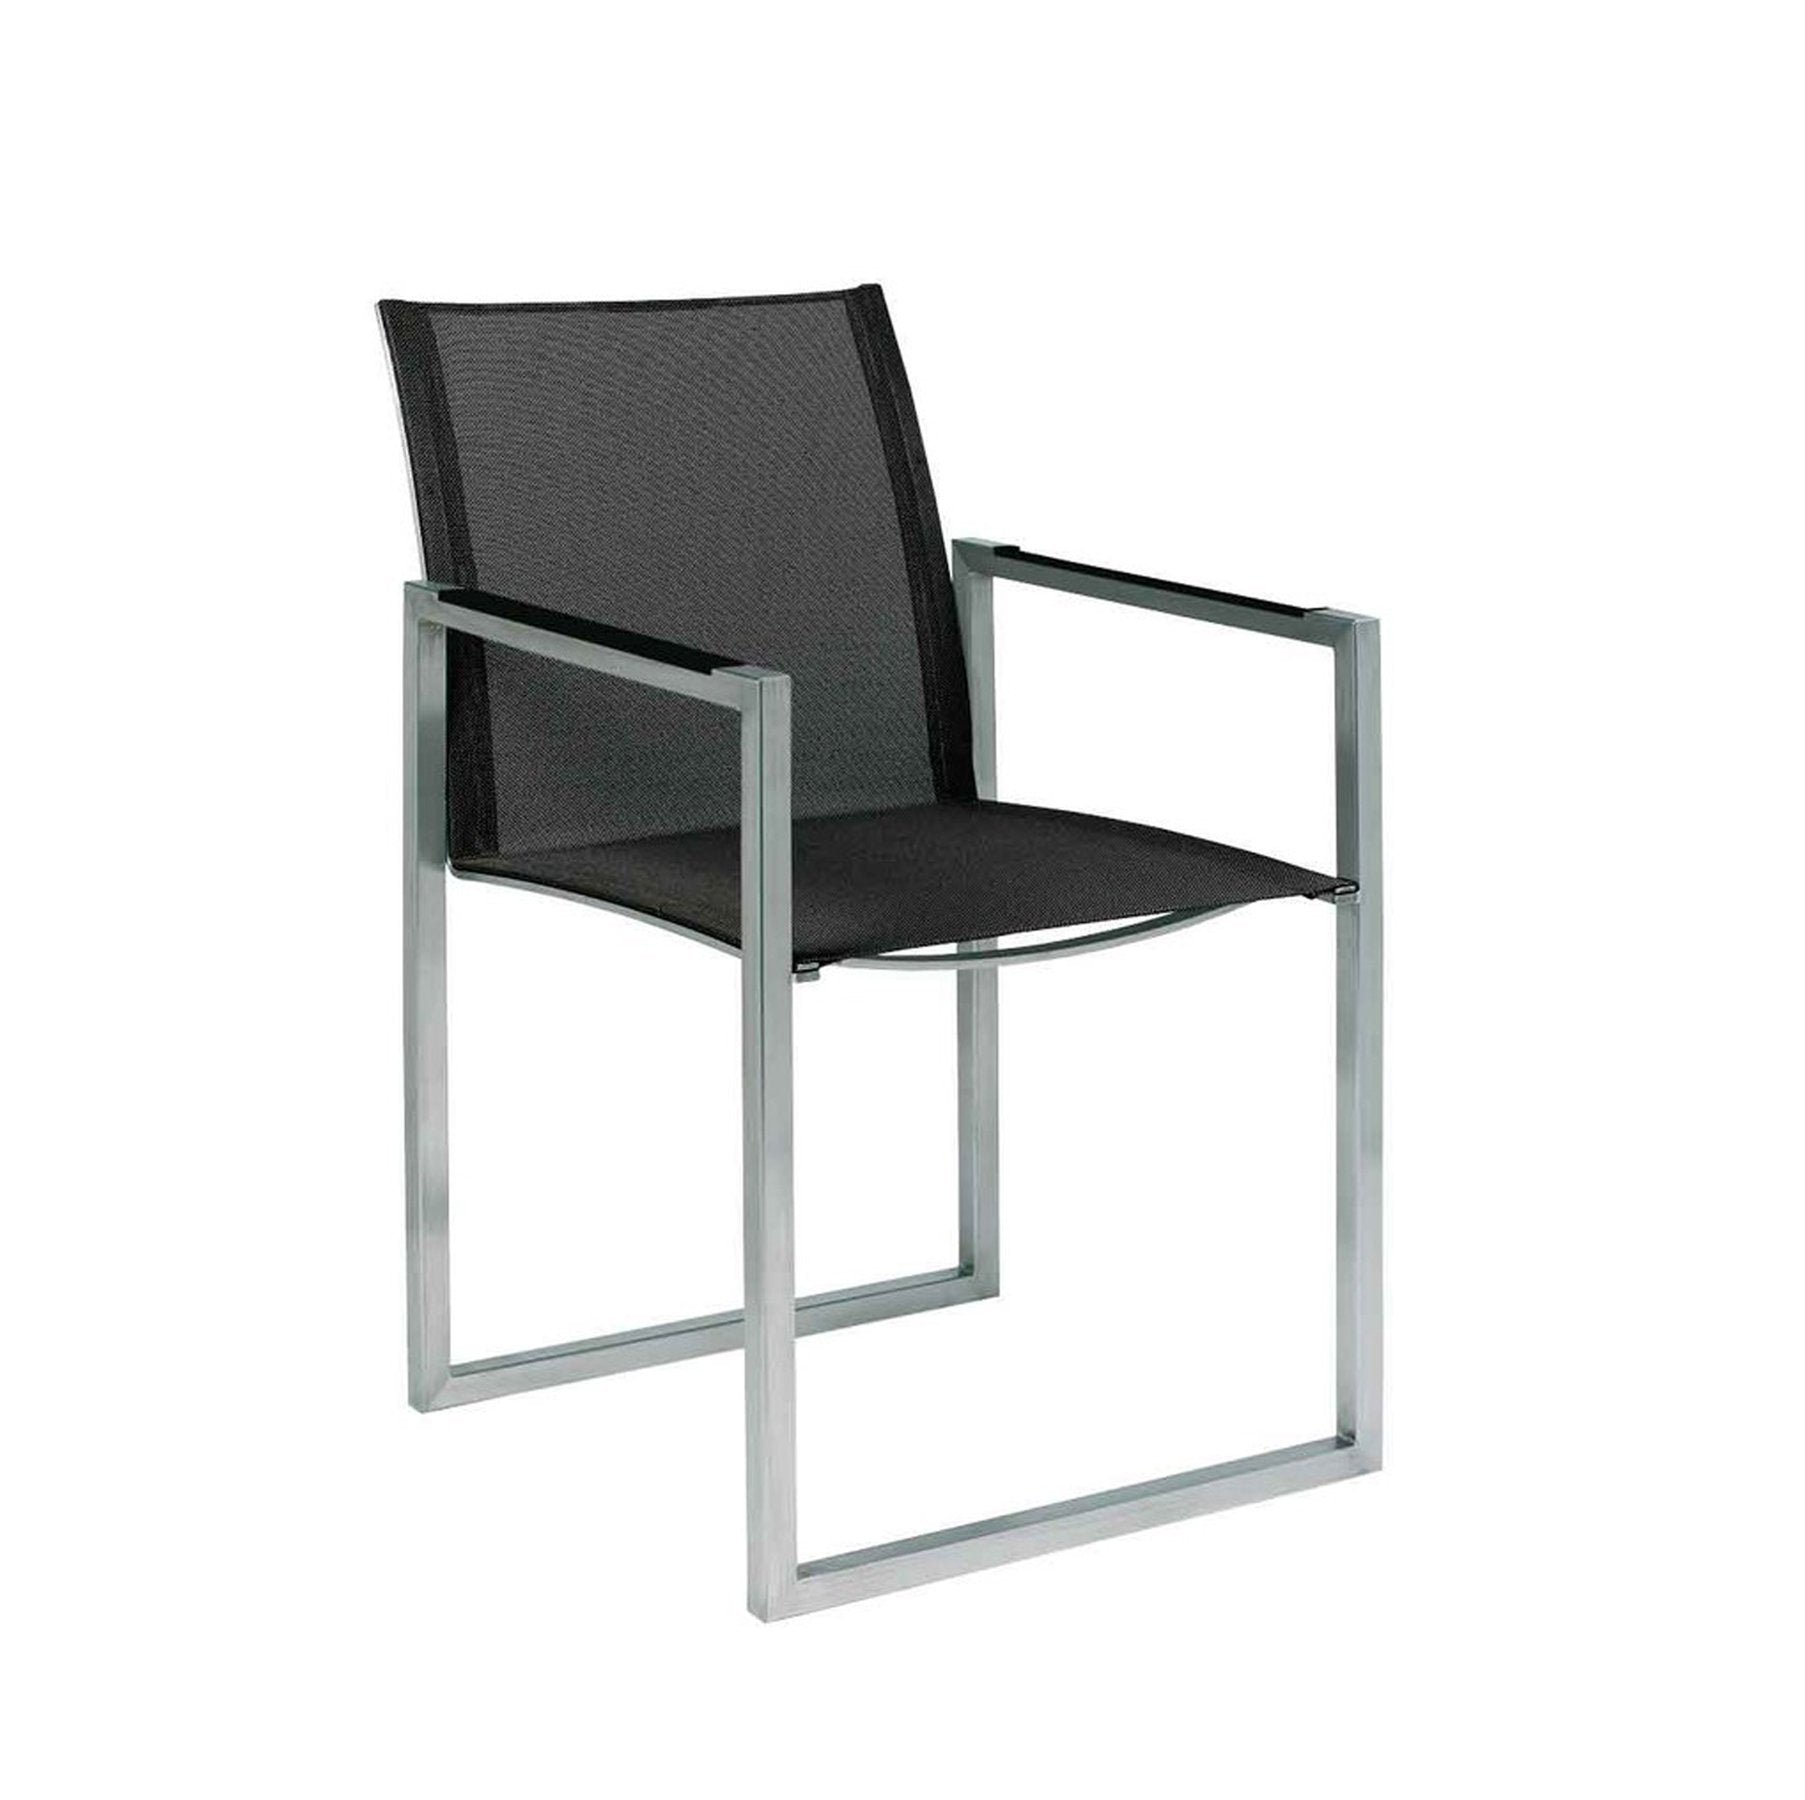 Ninix Batyline Chair